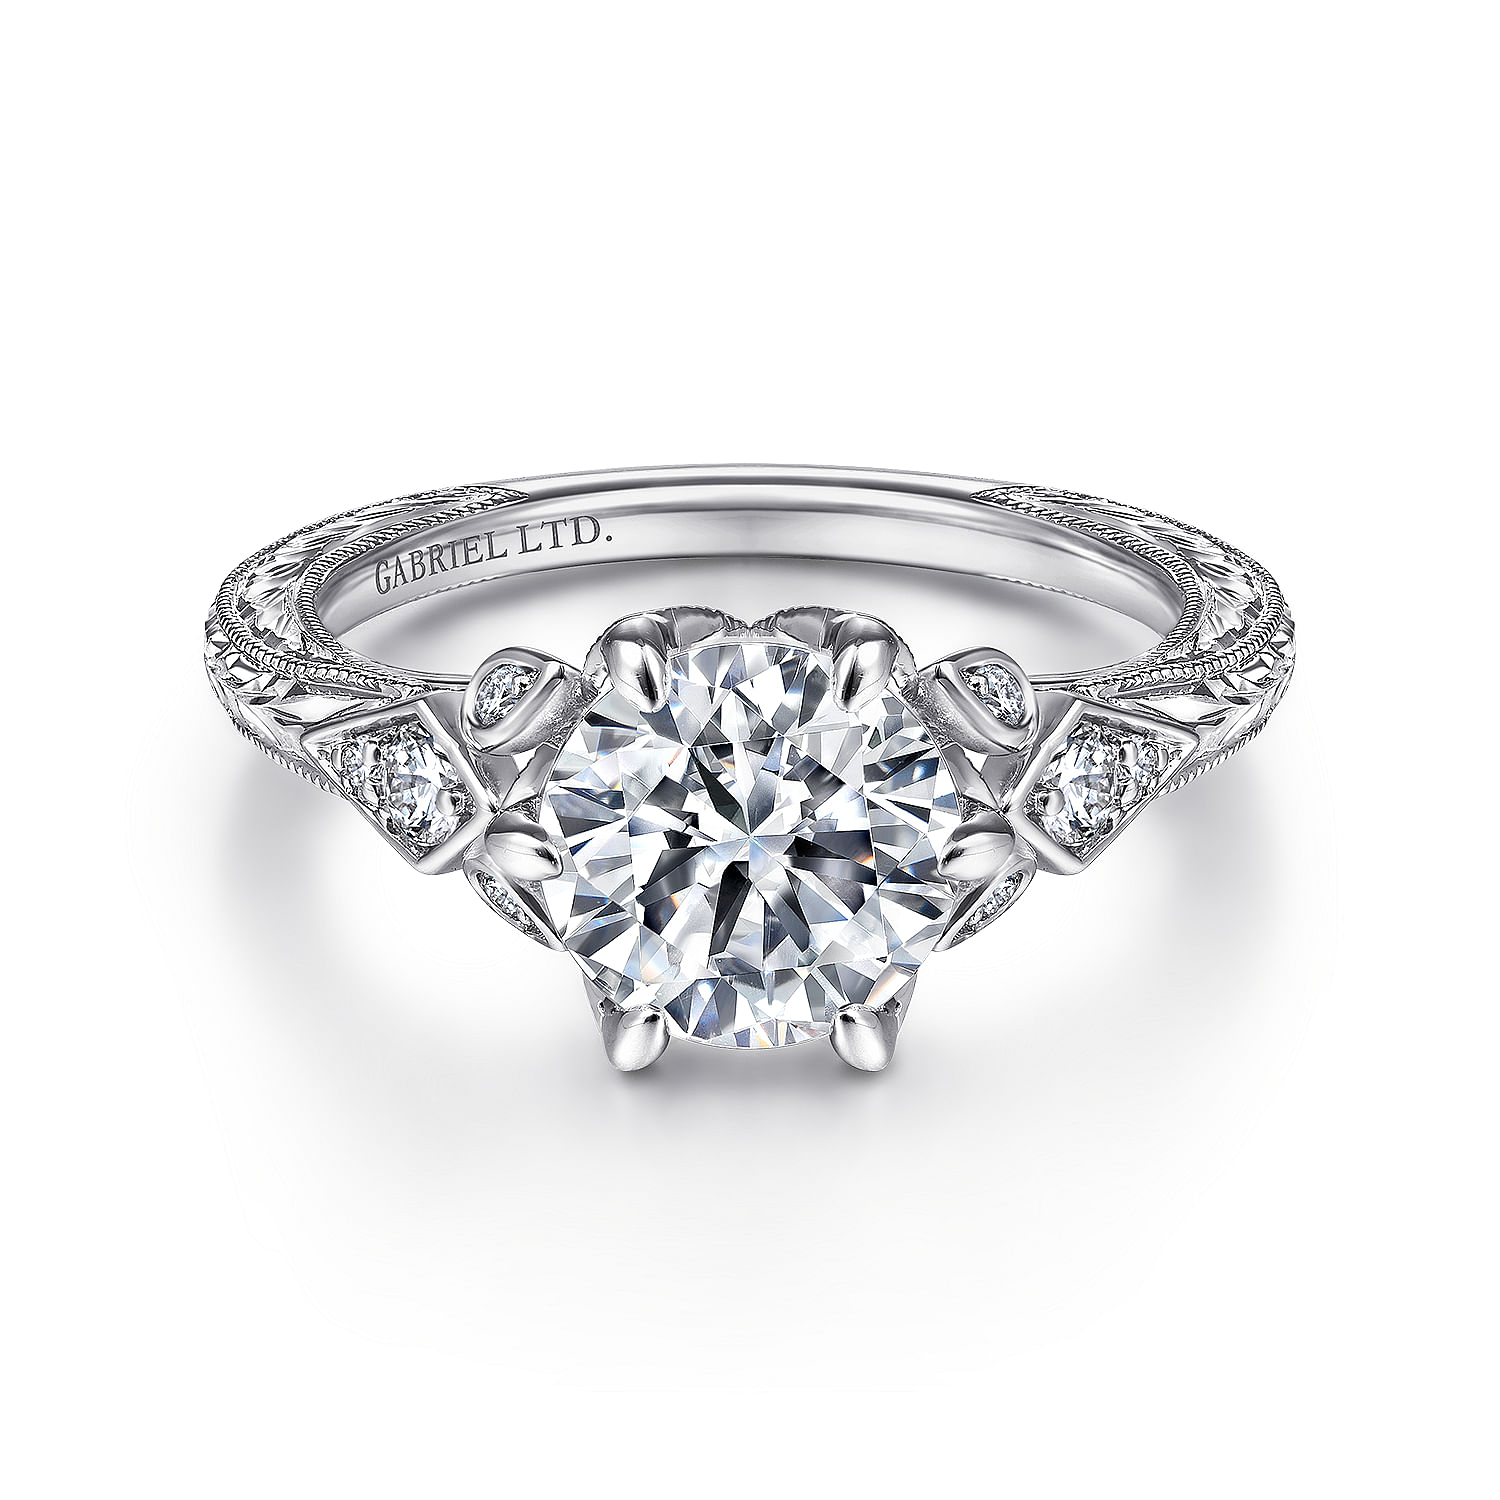 Karianne---Vintage-Inspired-18K-White-Gold-Round-Diamond-Channel-Set-Engagement-Ring1